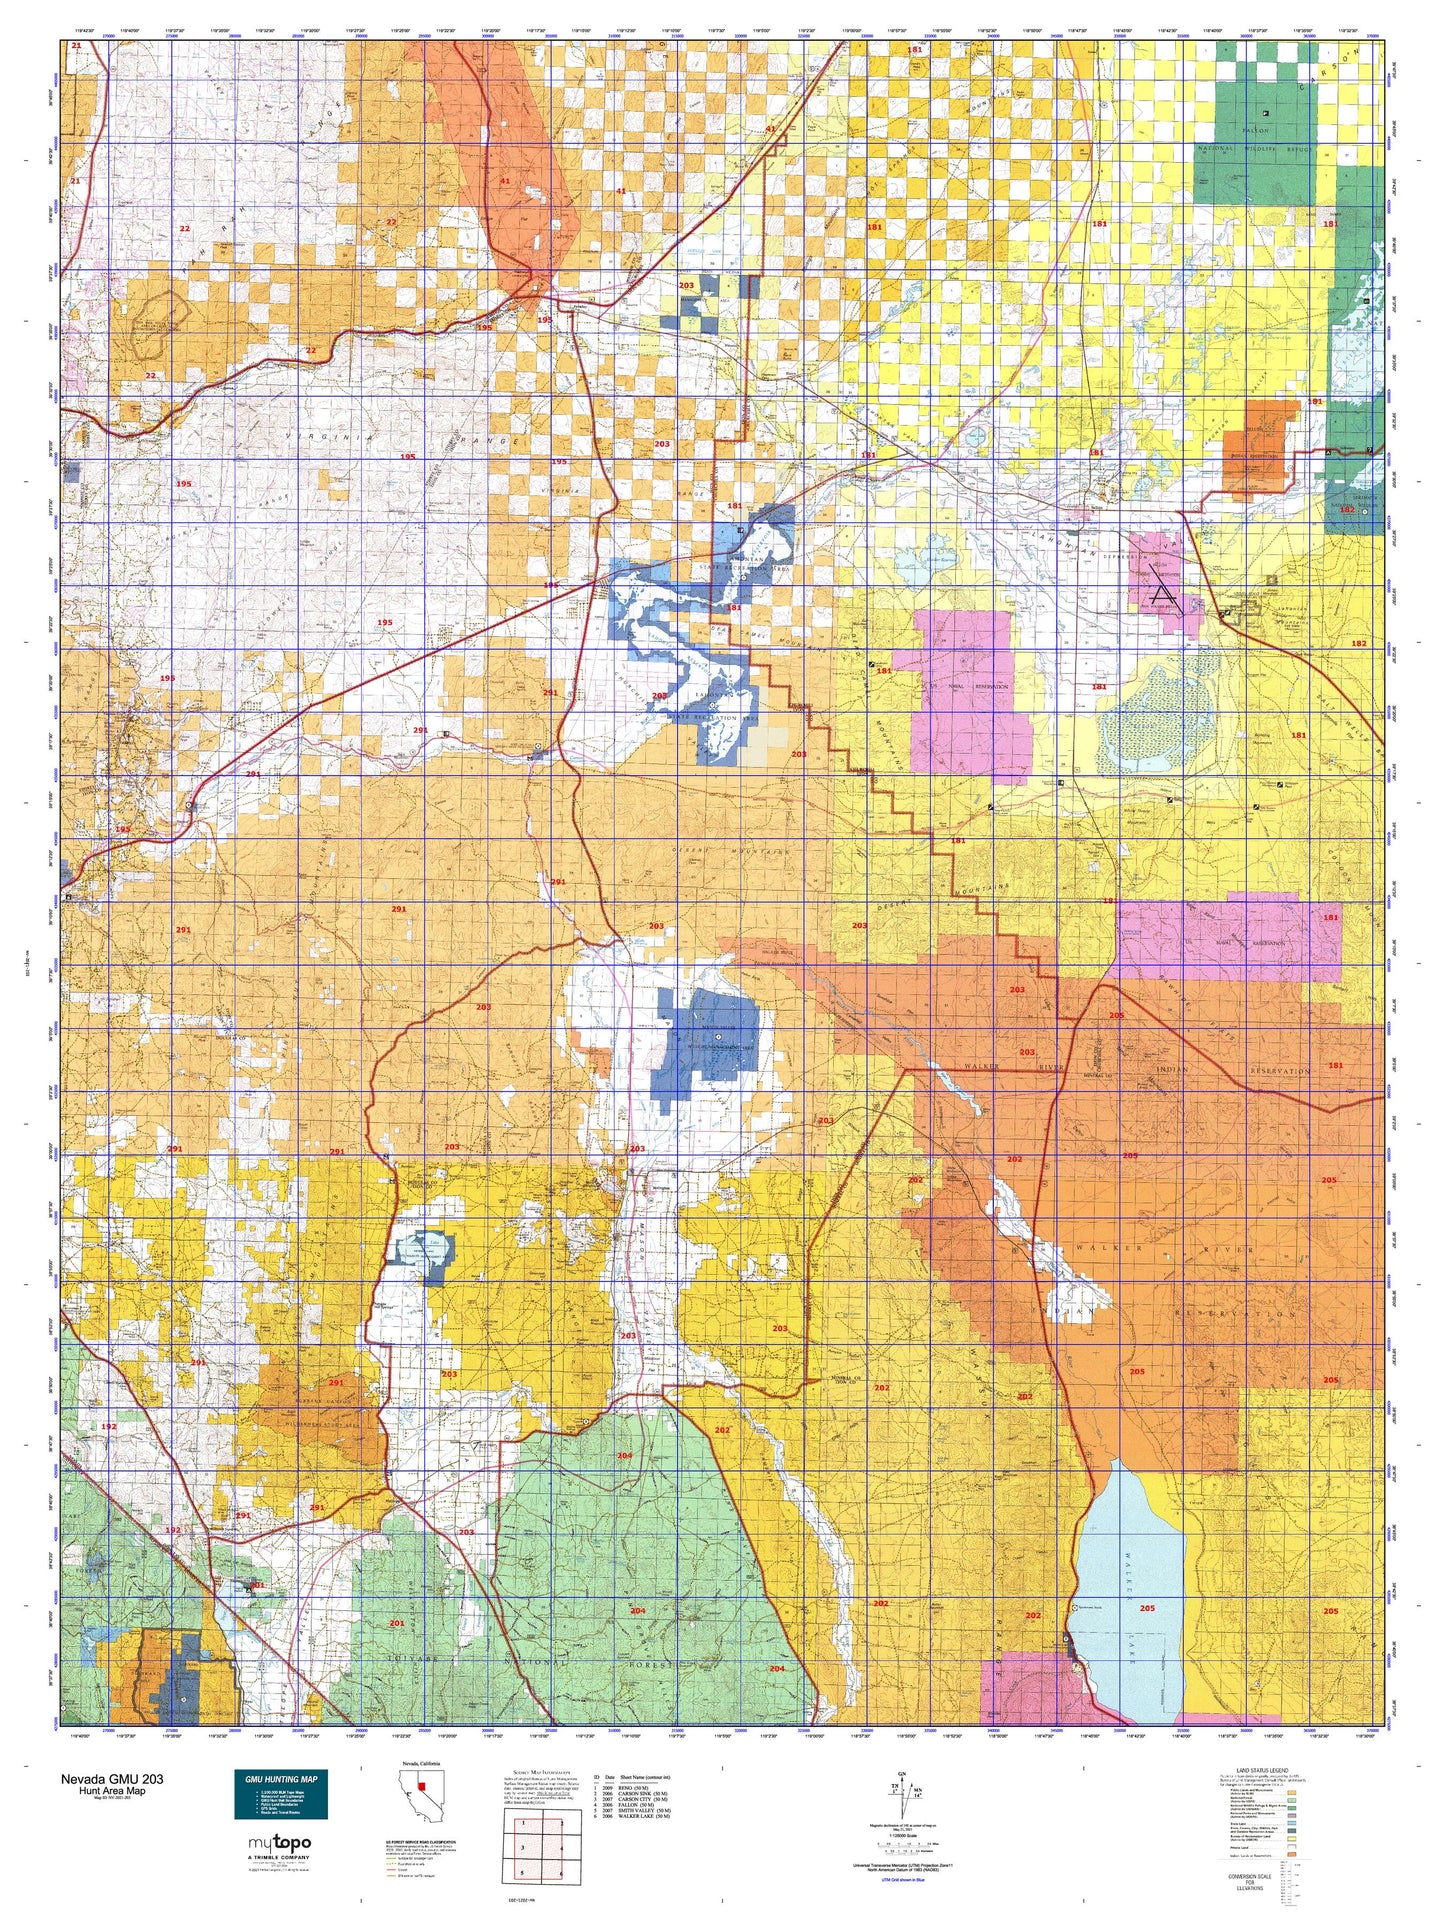 Nevada GMU 203 Map Image